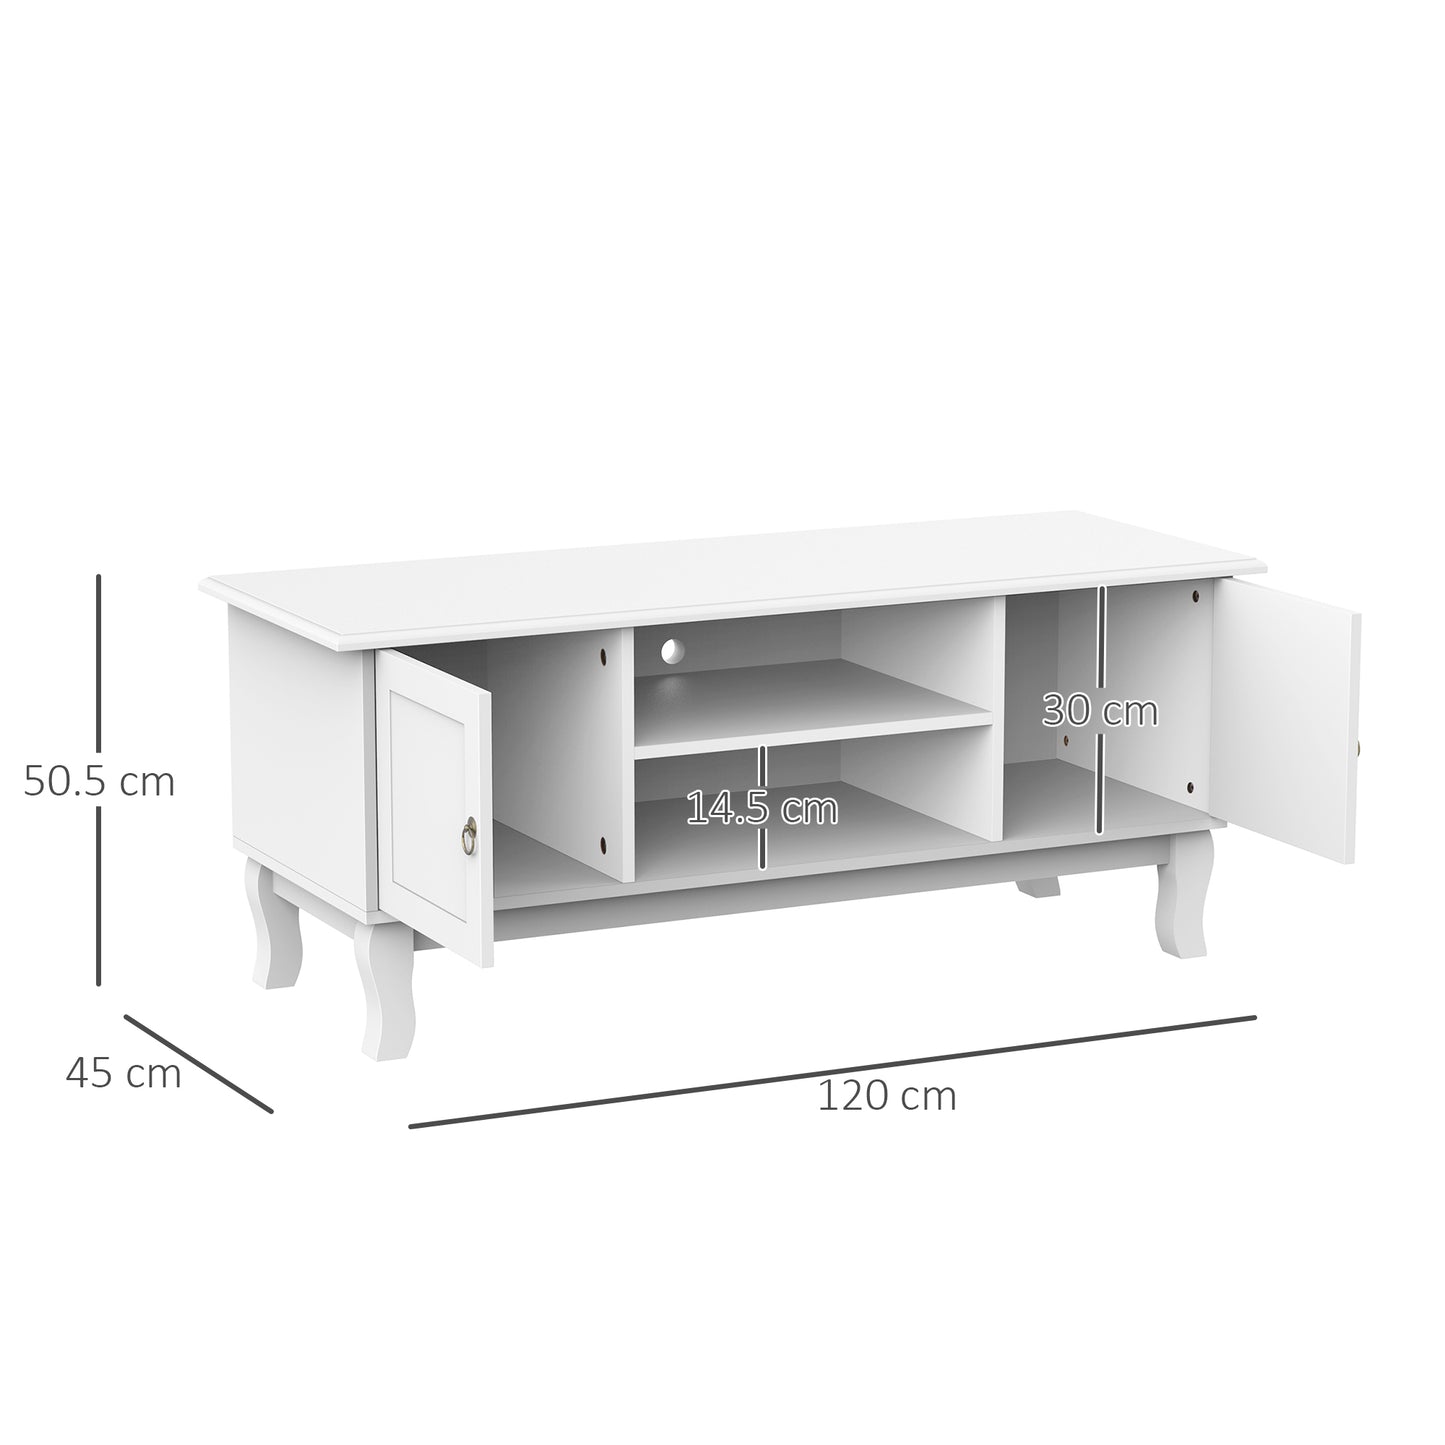 HOMCOM TV Stand Unit Corner Table, MDF-Ivory White